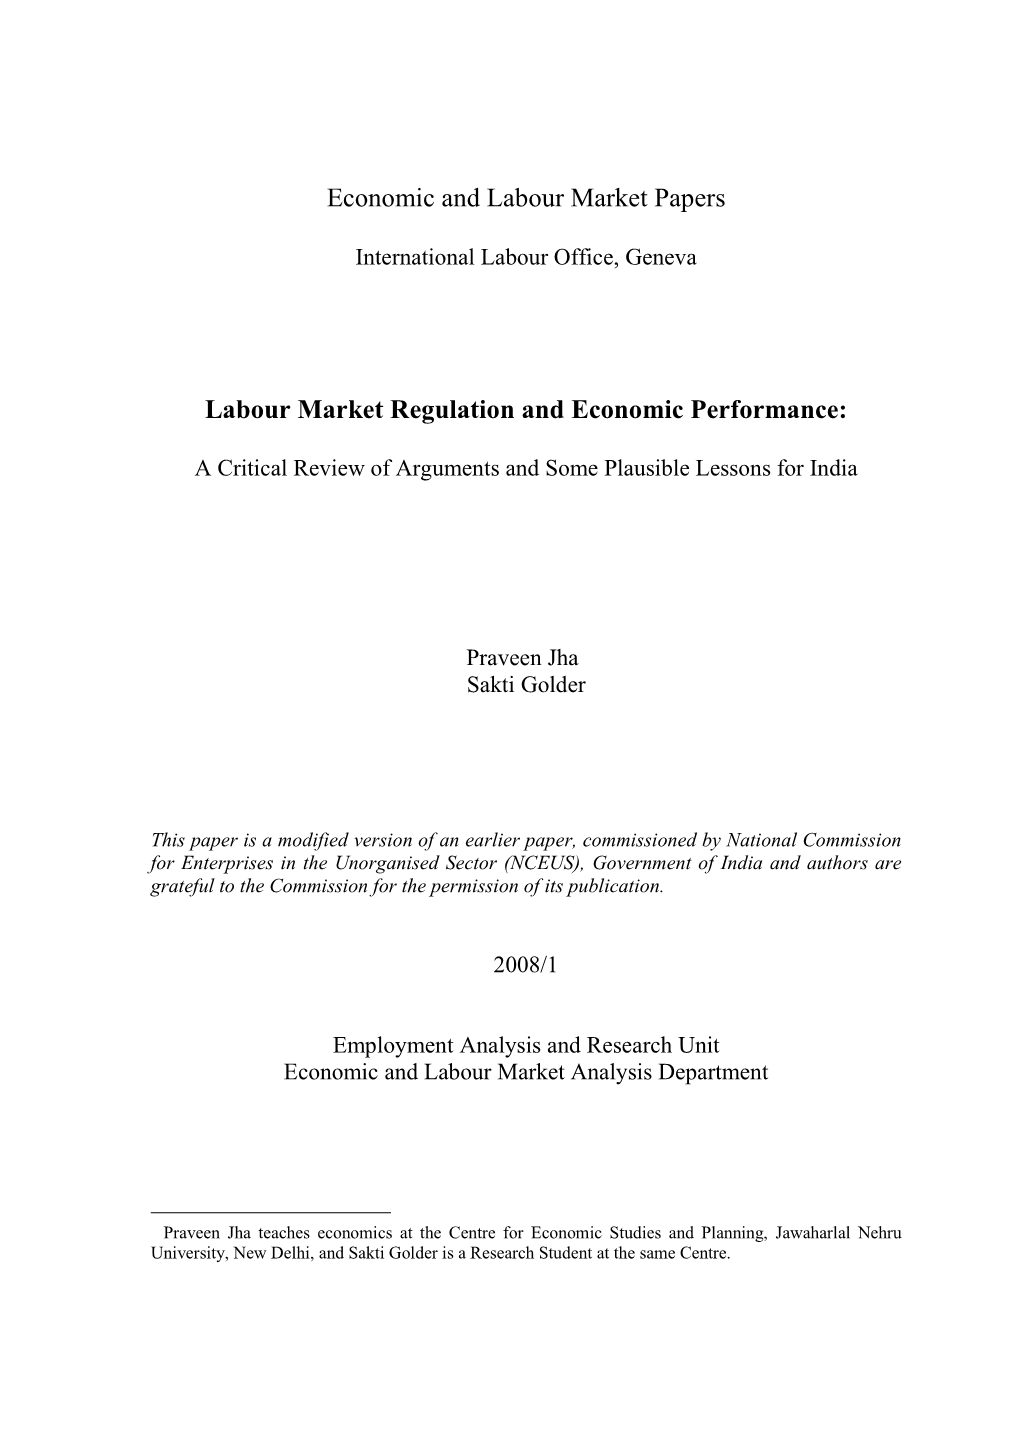 Labour Market Regulation and Economic Performance